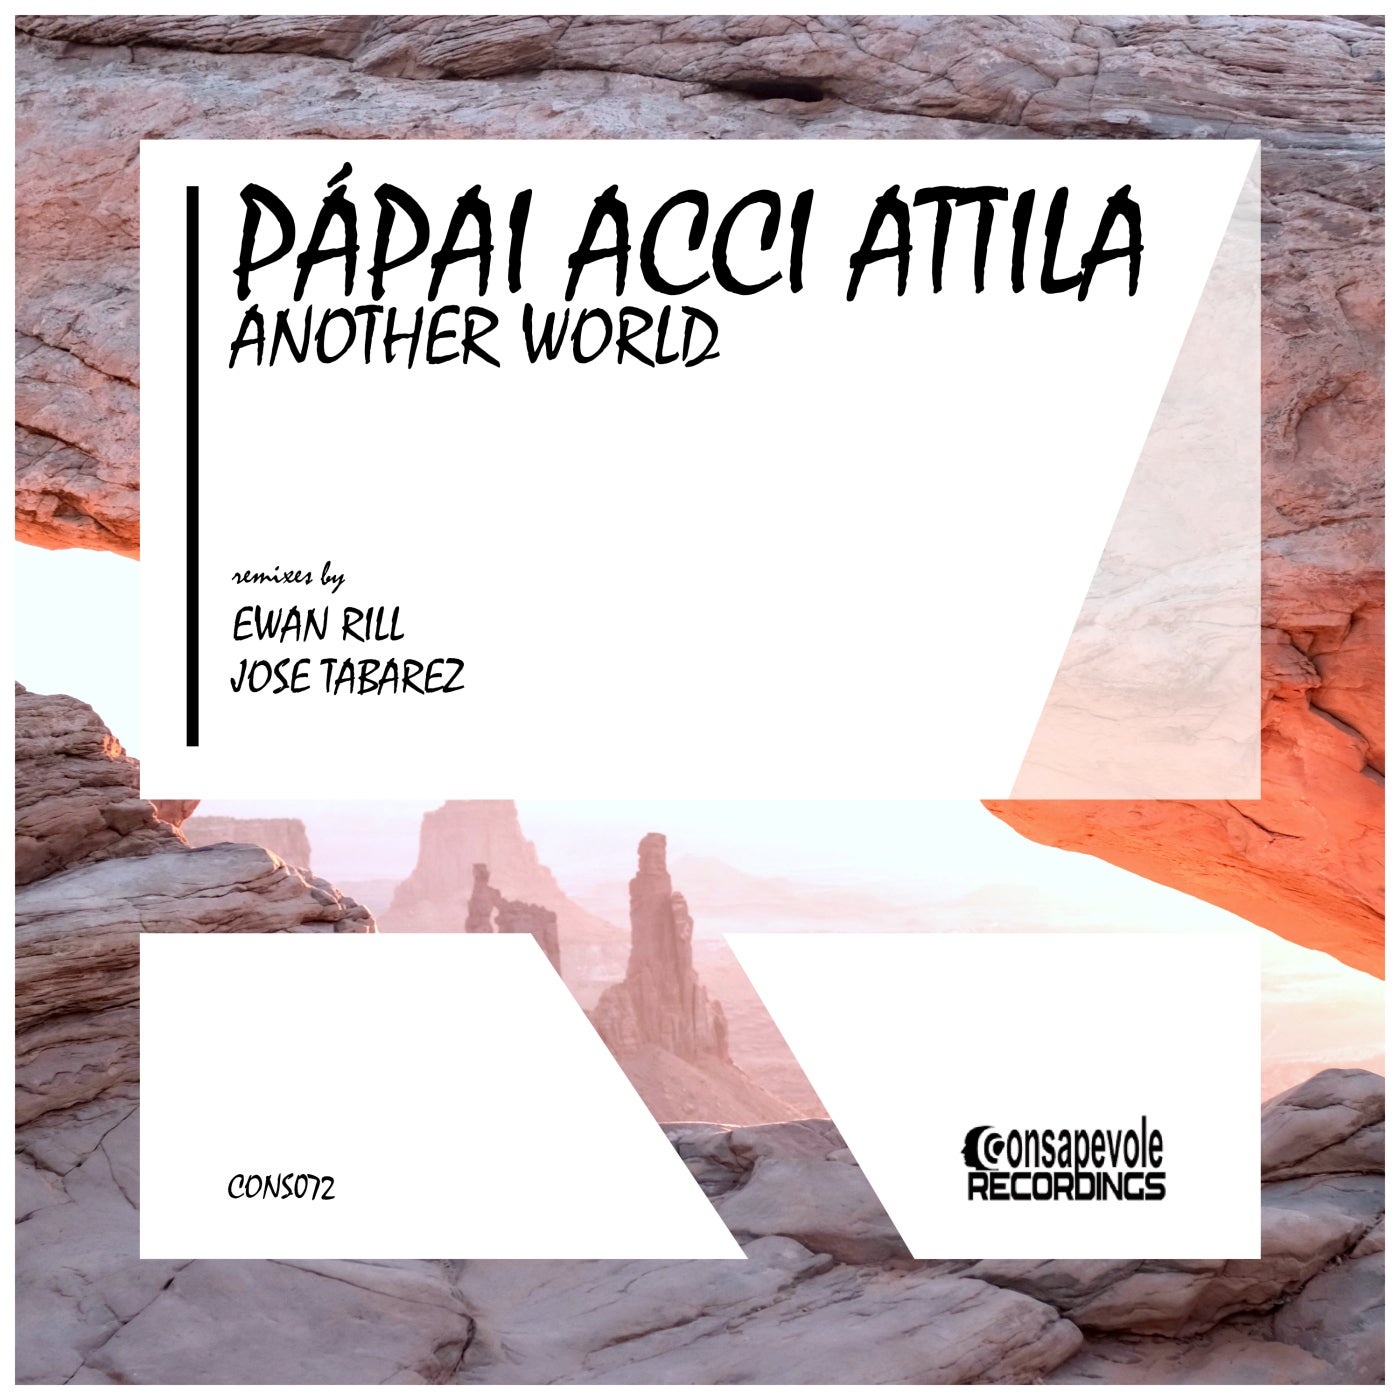 Papai ACCI Attila - Another World [CONS072]